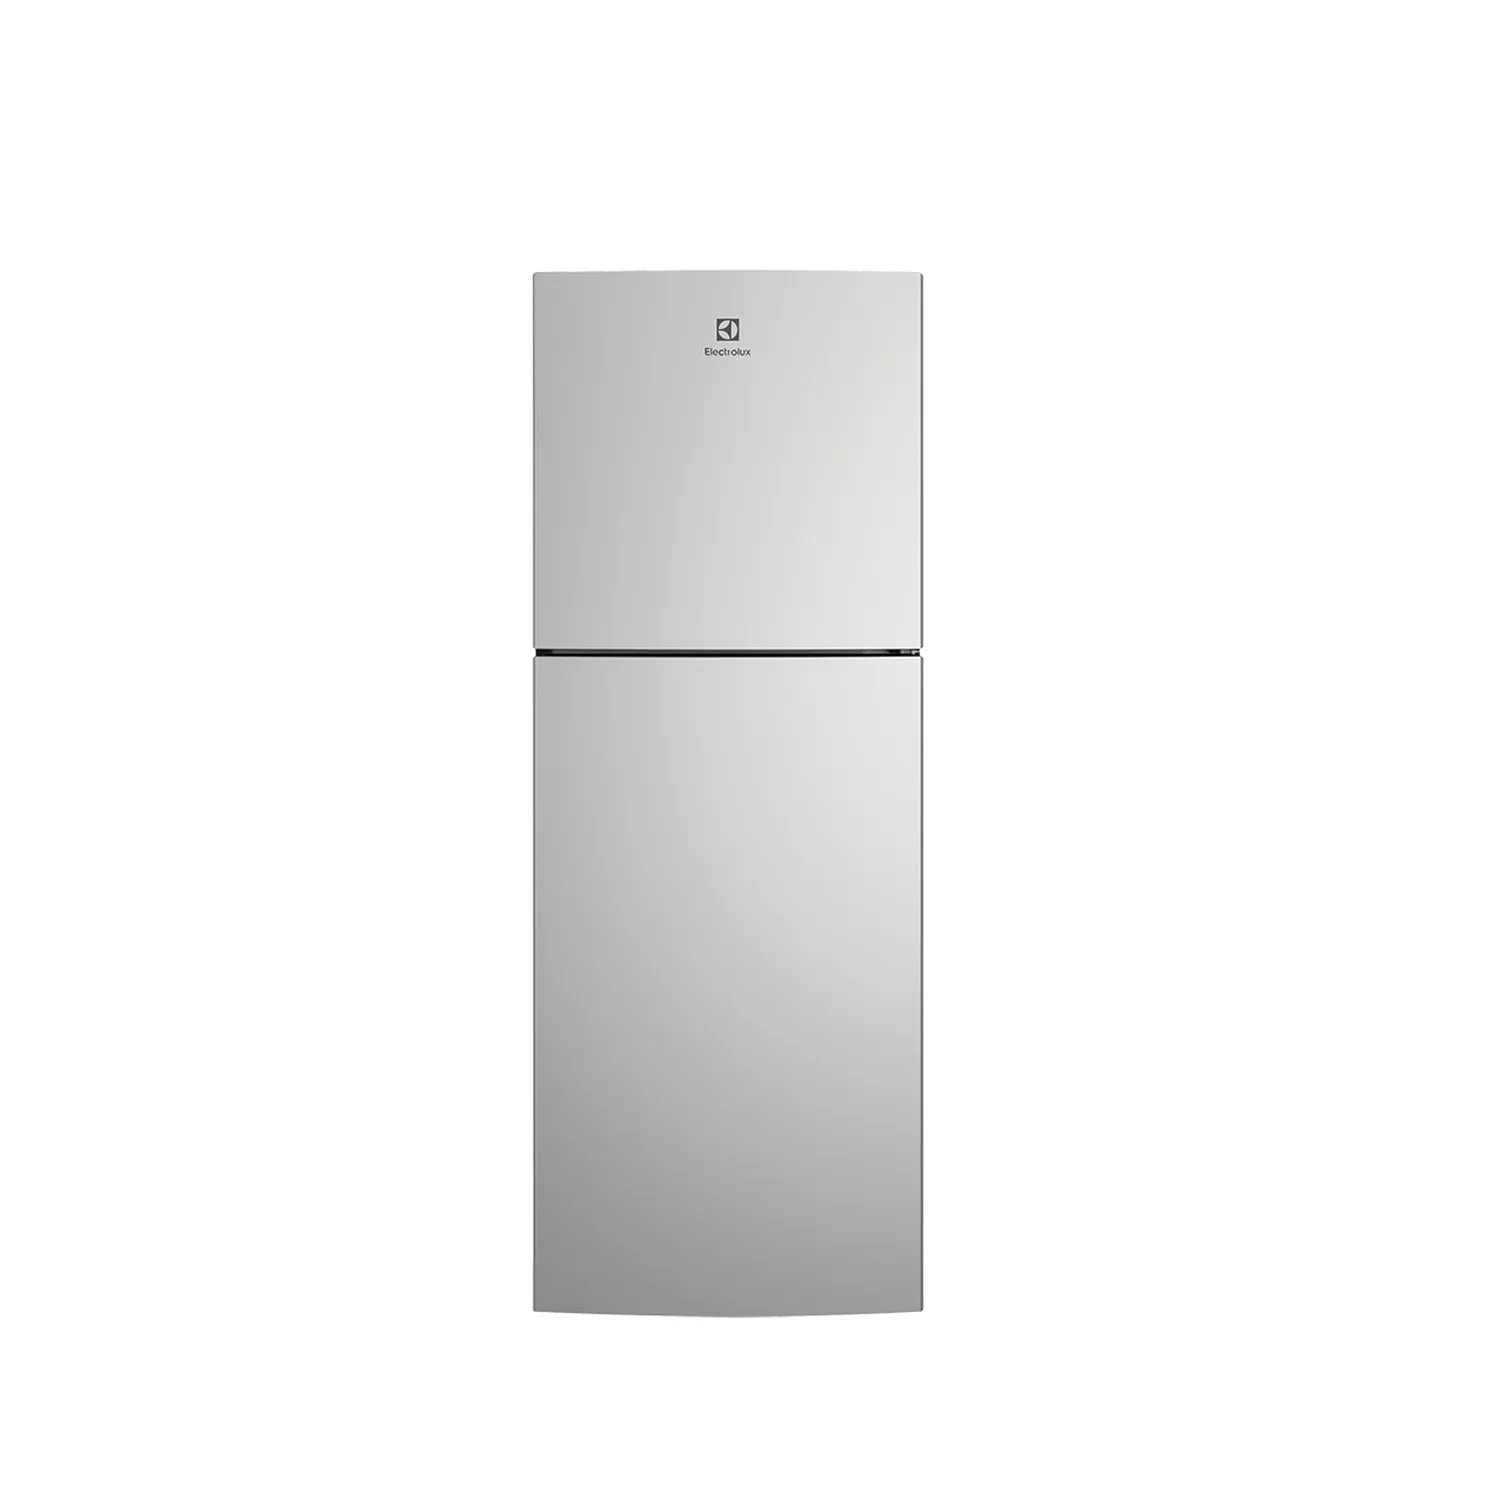 Electrolux ตู้เย็น 2 ประตู แบบฟรีซบน INVERTER ความจุ 225 ลิตร ( 7.9 คิว) รุ่น ETB2502J